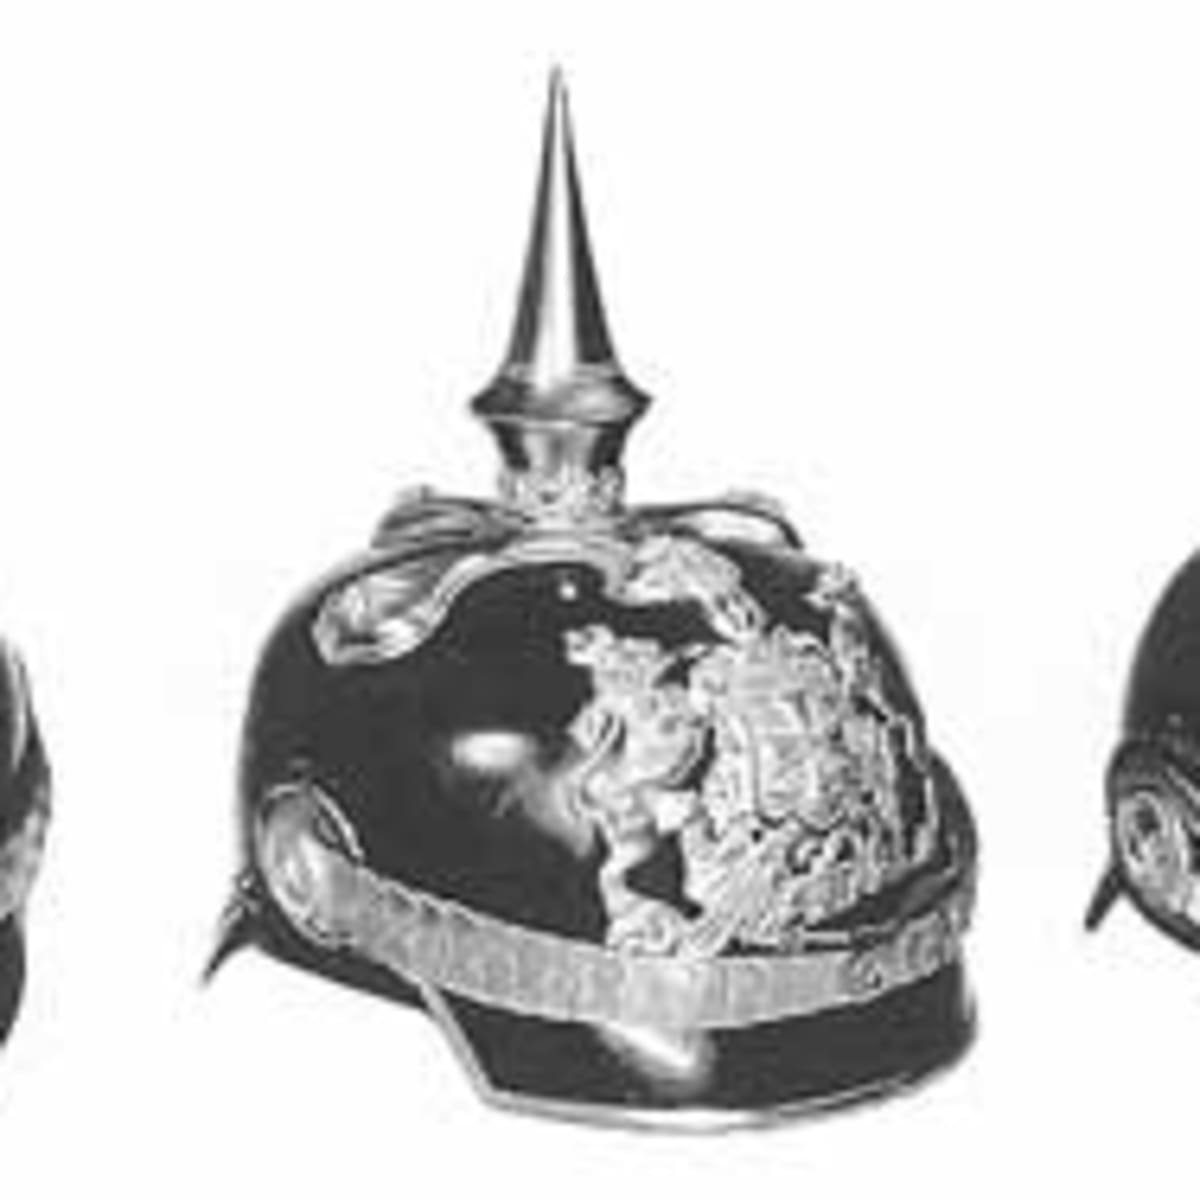 Pickelhaube The Story Of The German Spiked Helmet Military Trader Vehicles - pickelhaube roblox